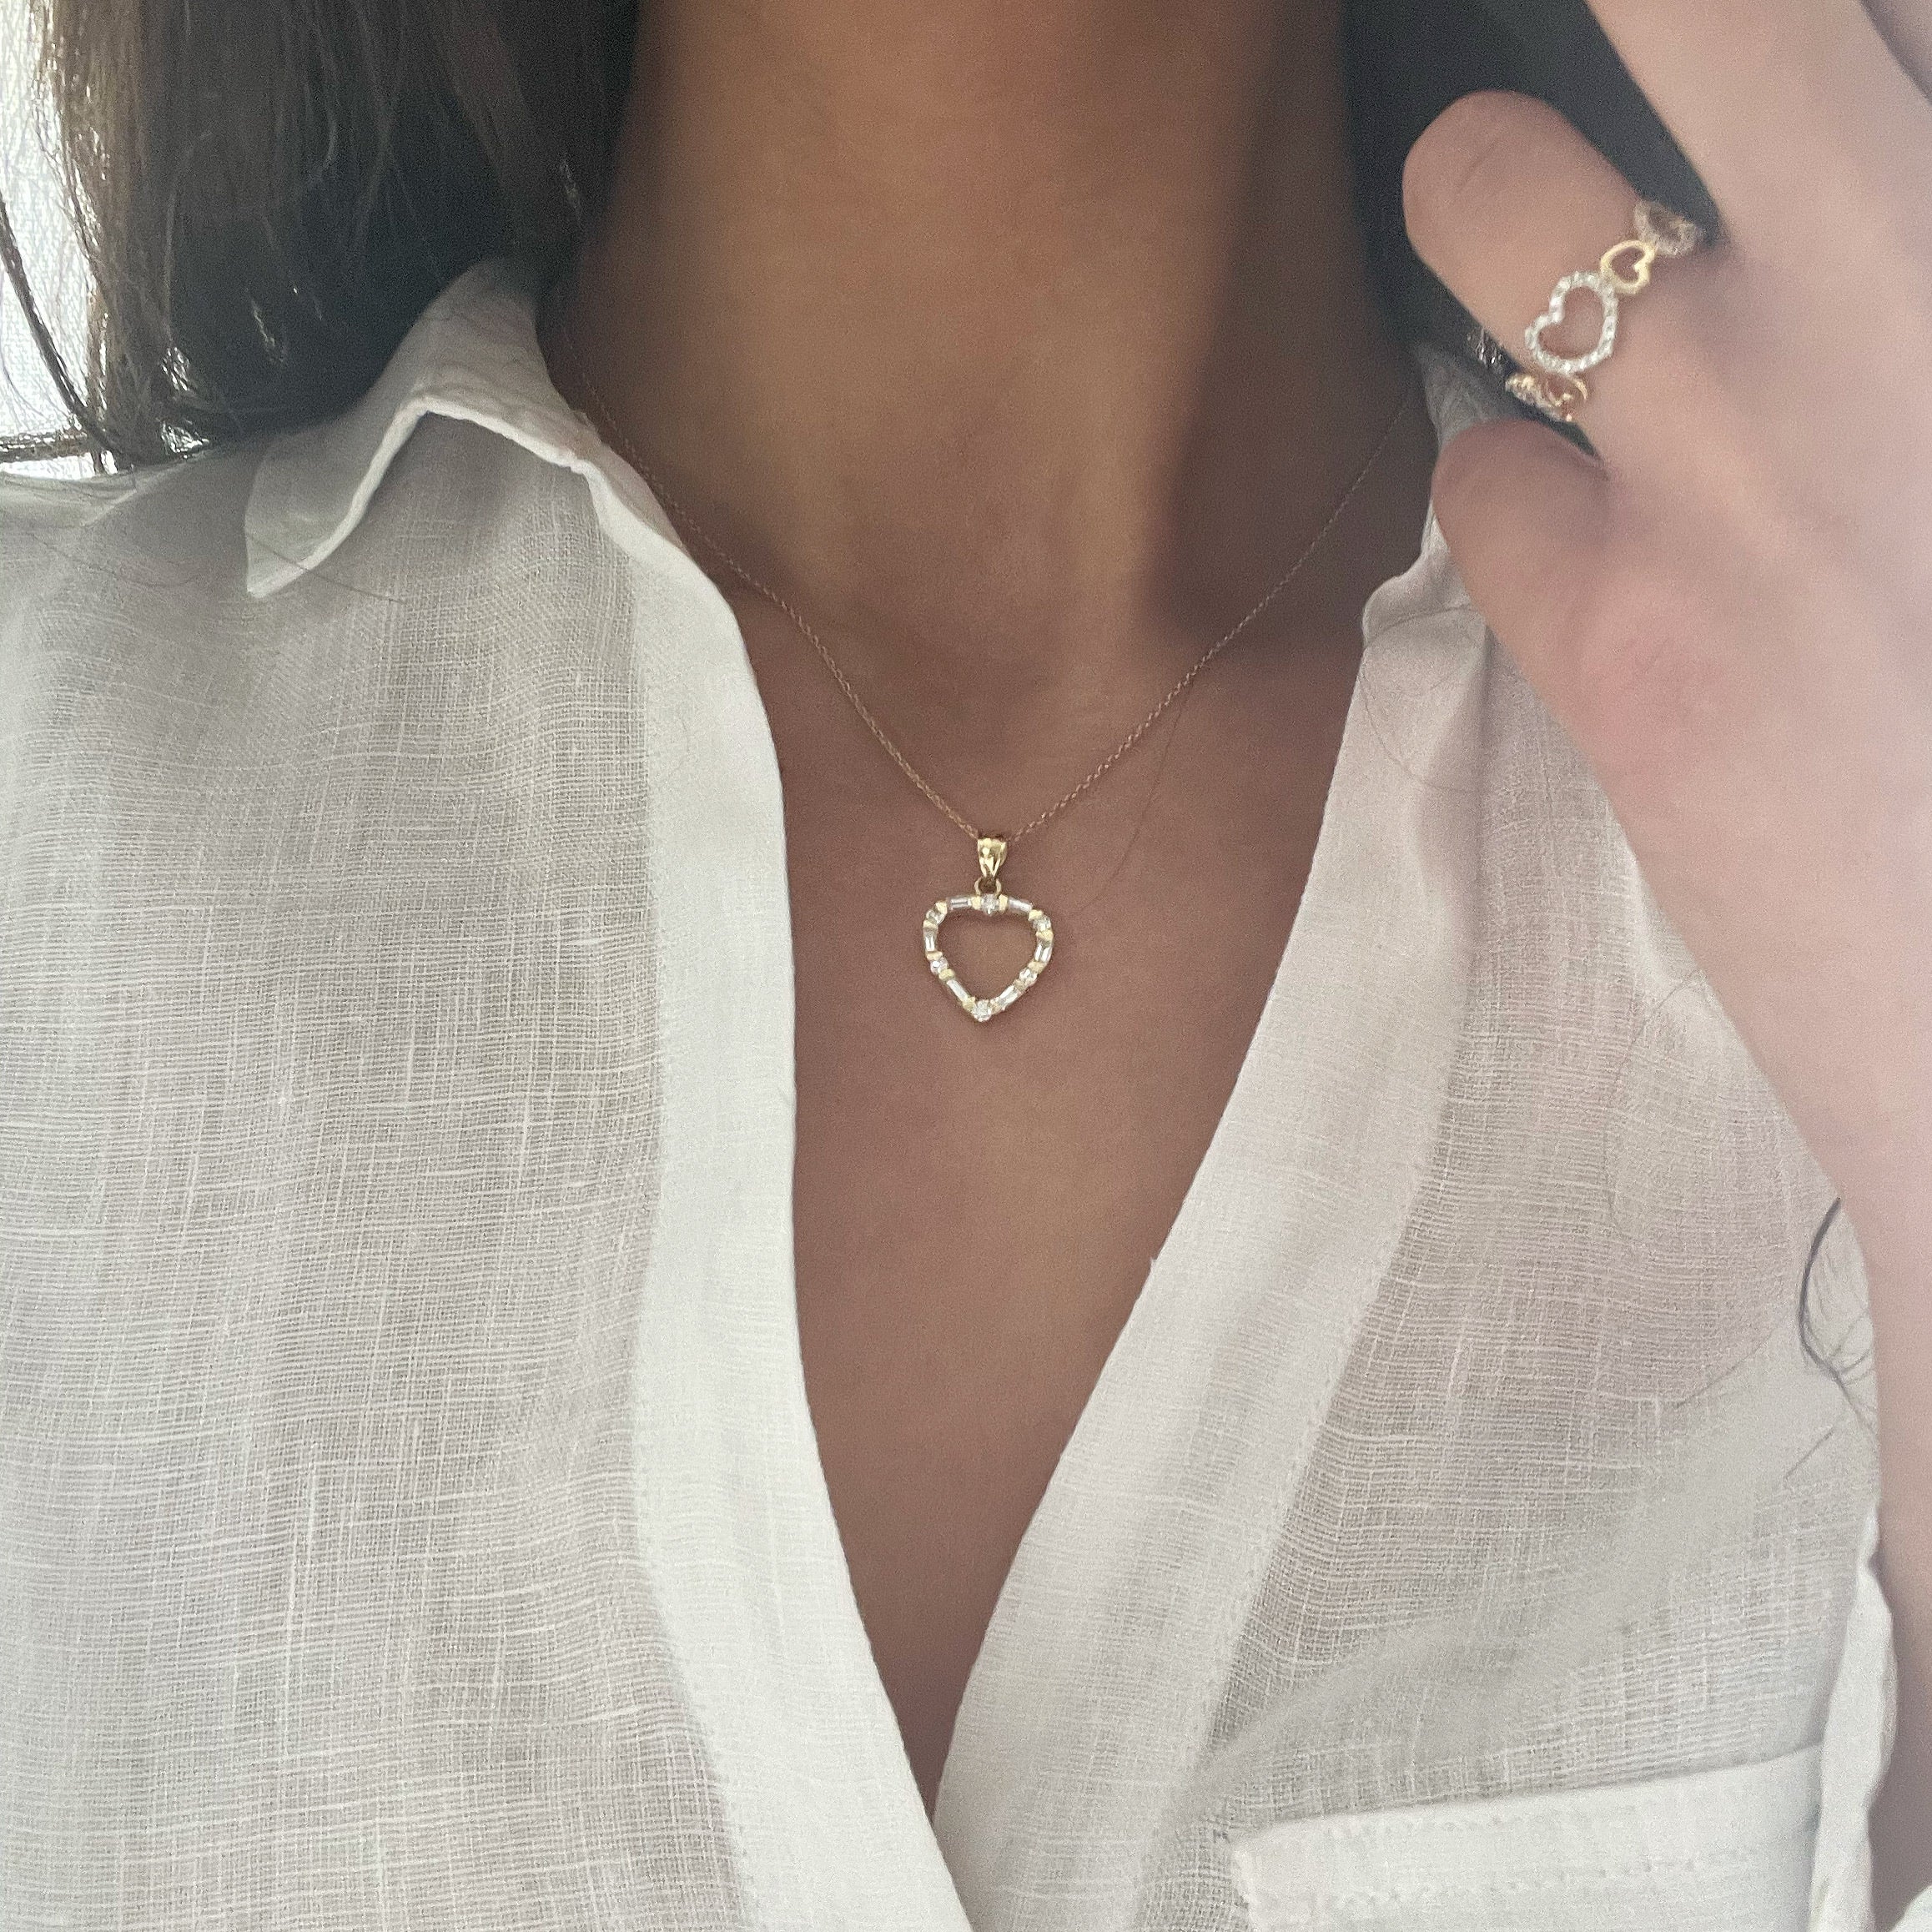 Iconic Diamond Cut Golden Heart Necklace